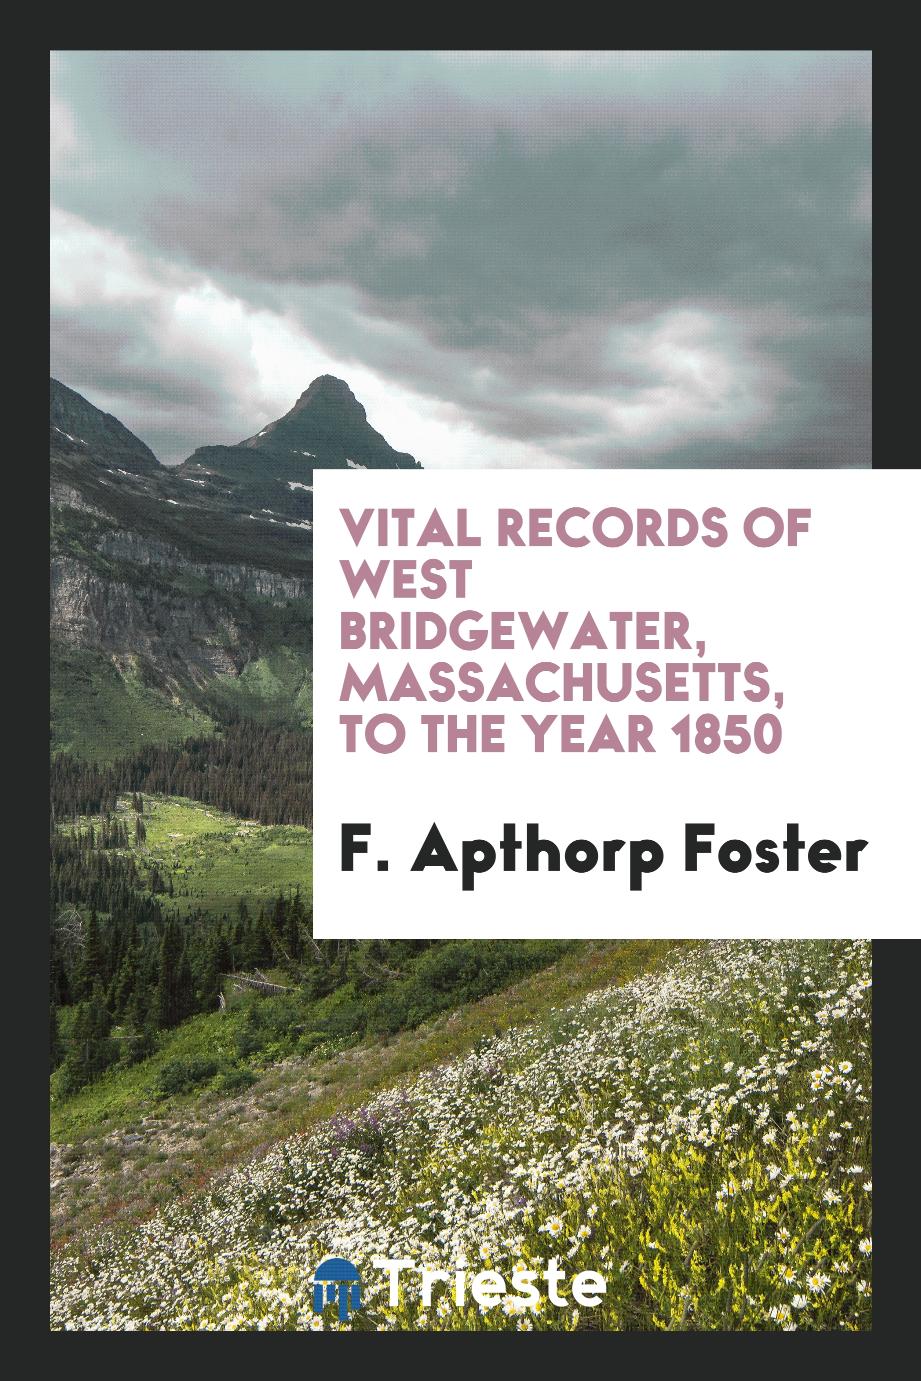 Vital records of West Bridgewater, Massachusetts, to the year 1850